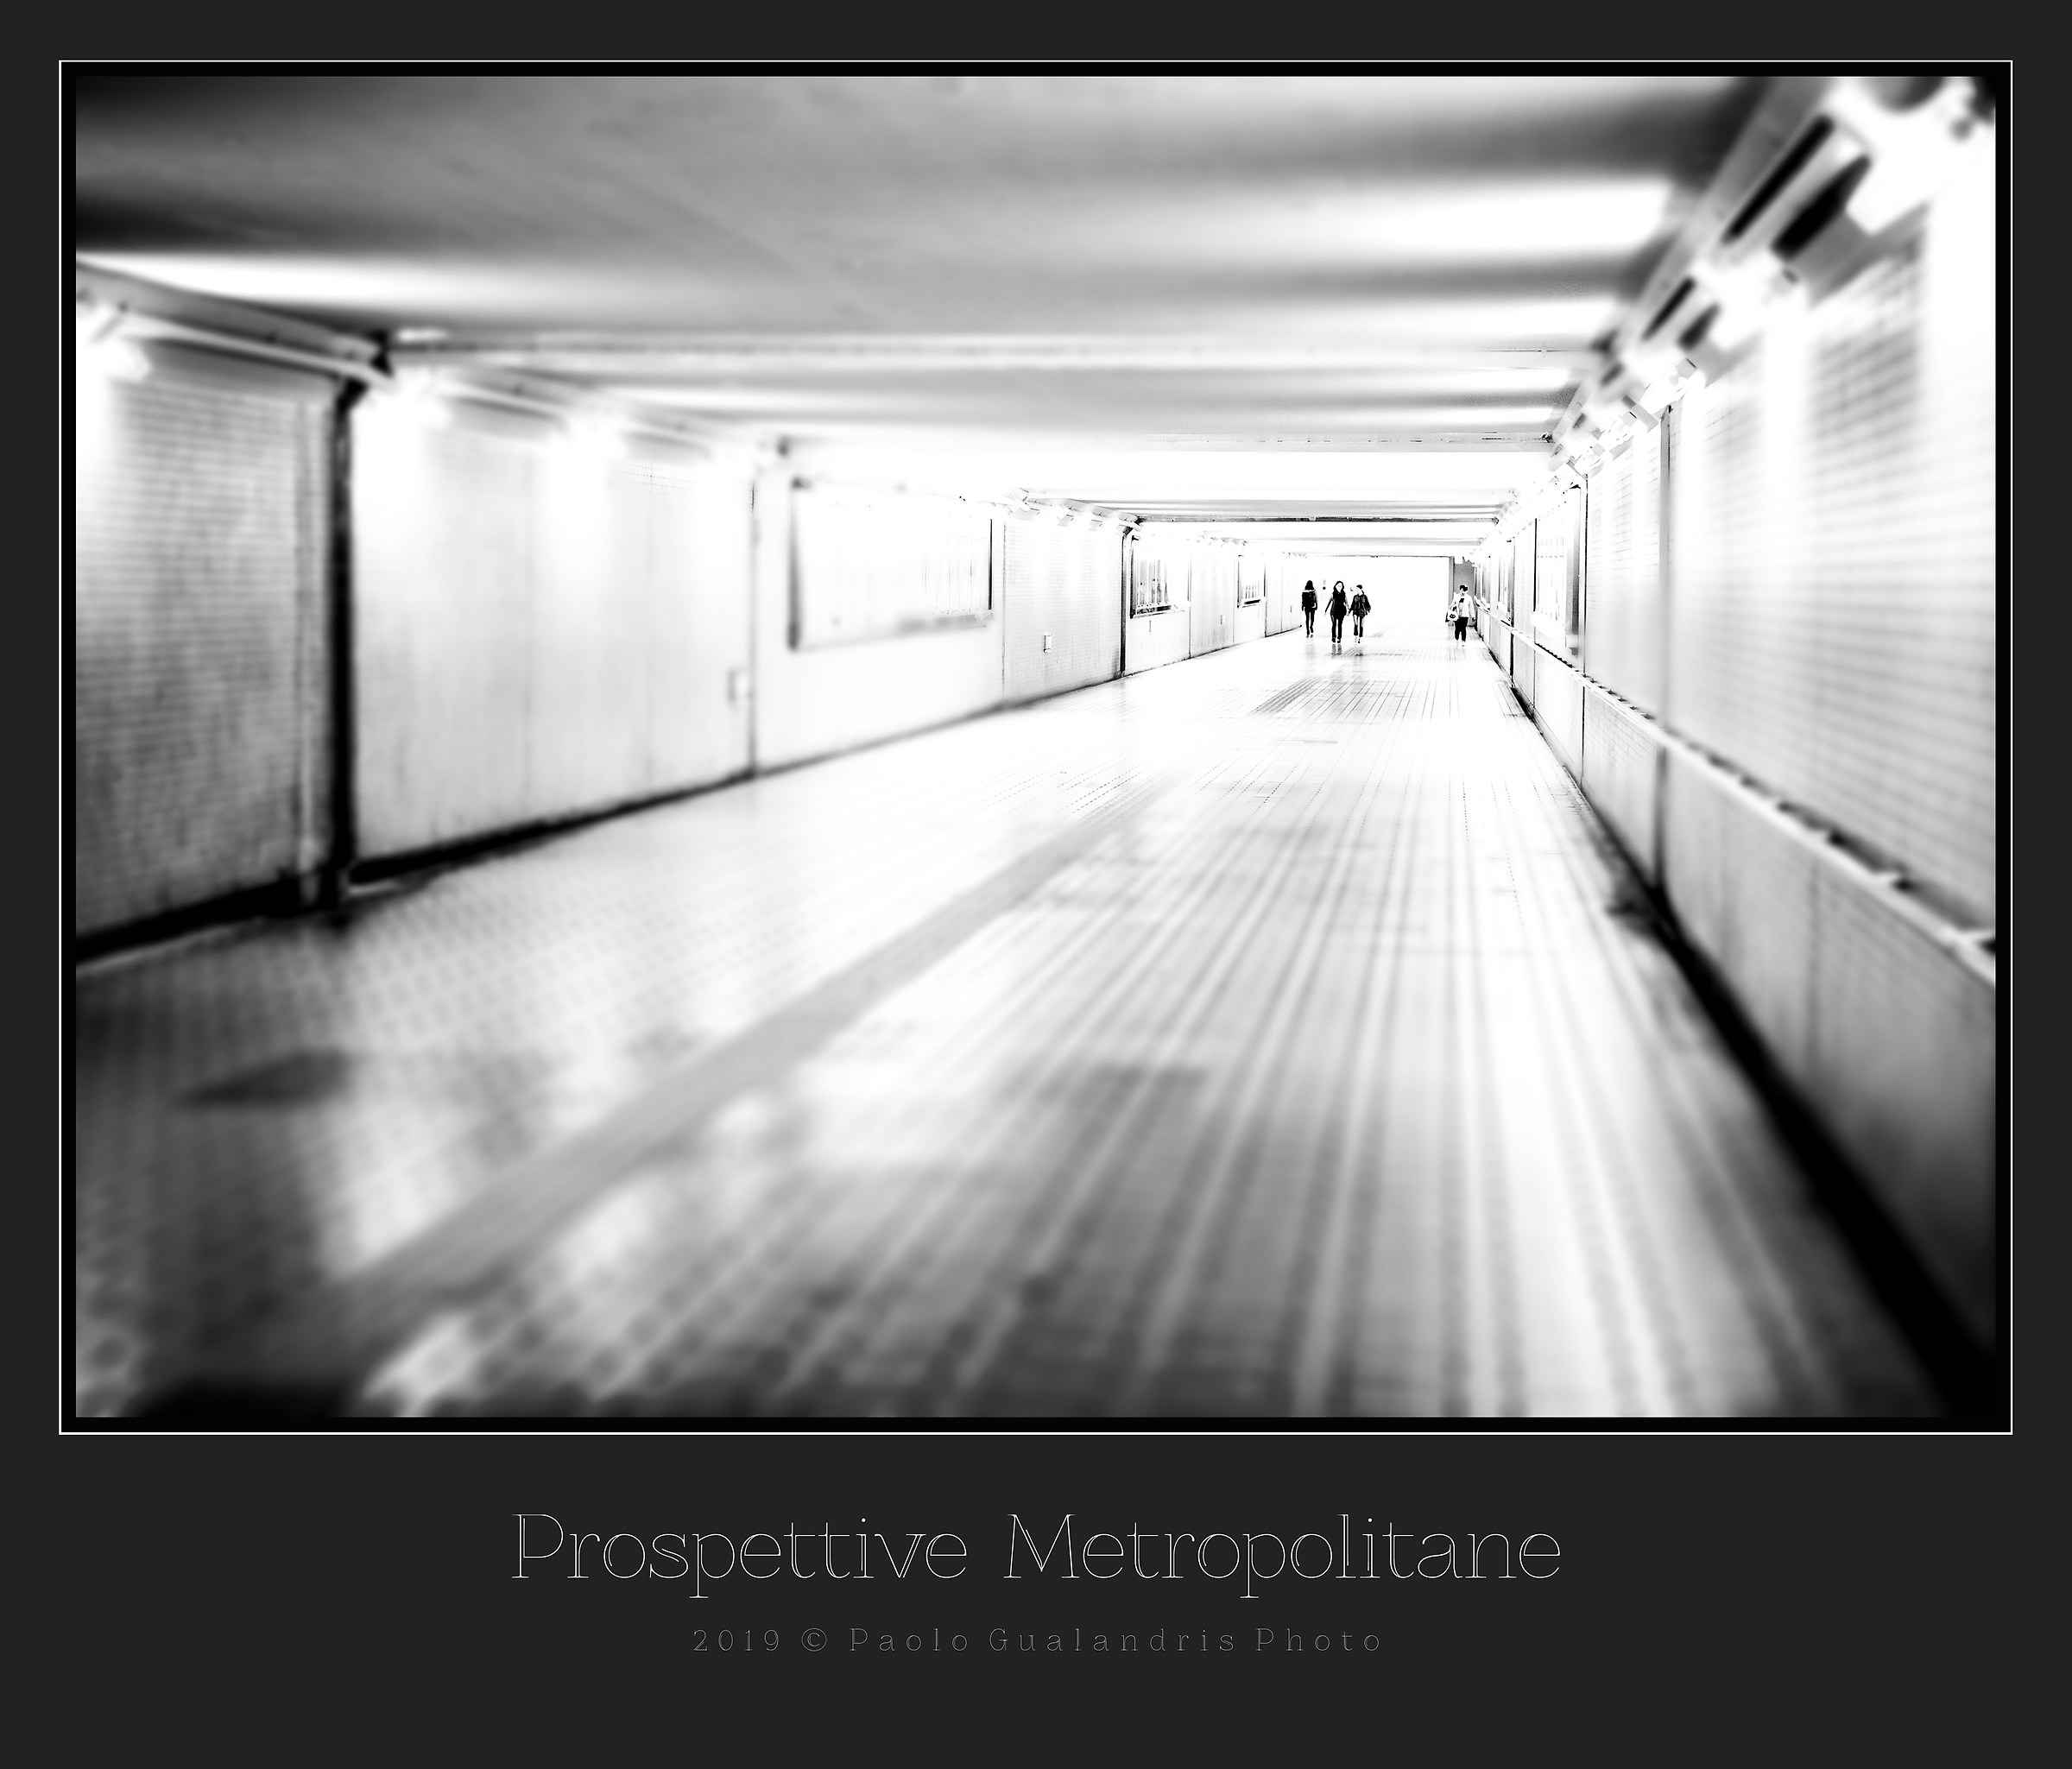 Metropolitan perspectives...